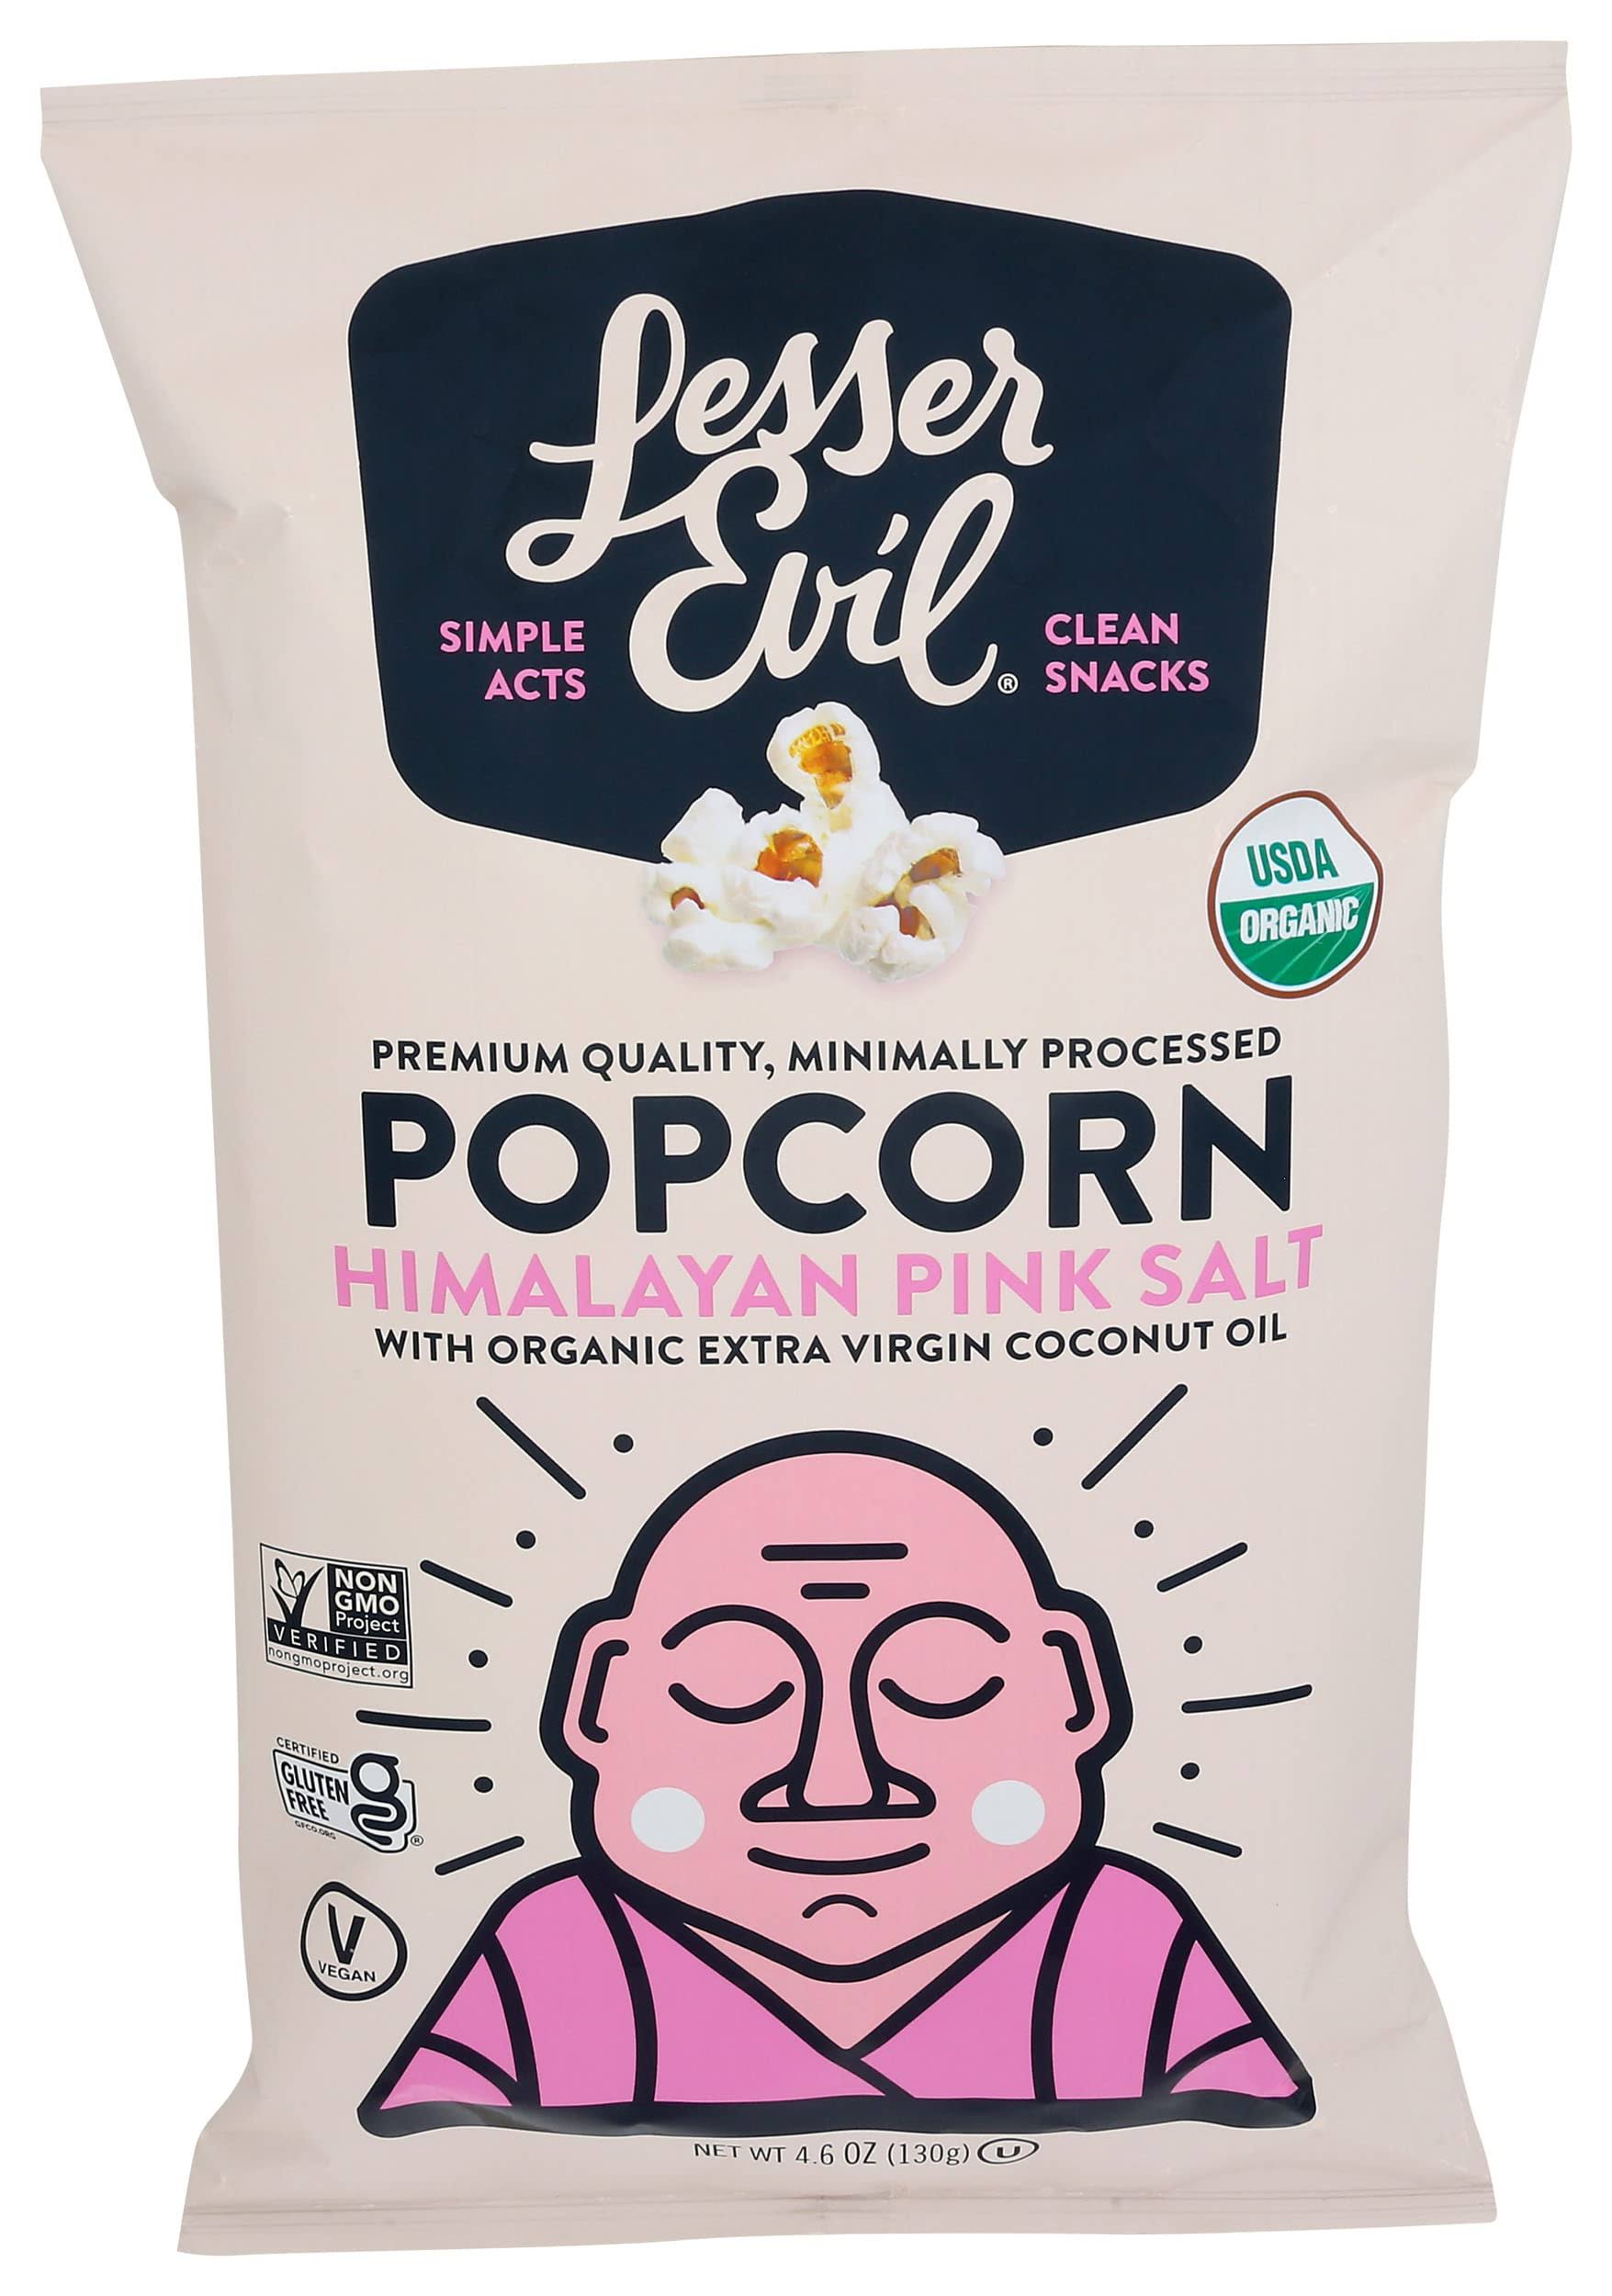 Lesserevil Buddha Bowl Organic Popcorn - Himalayan Pink